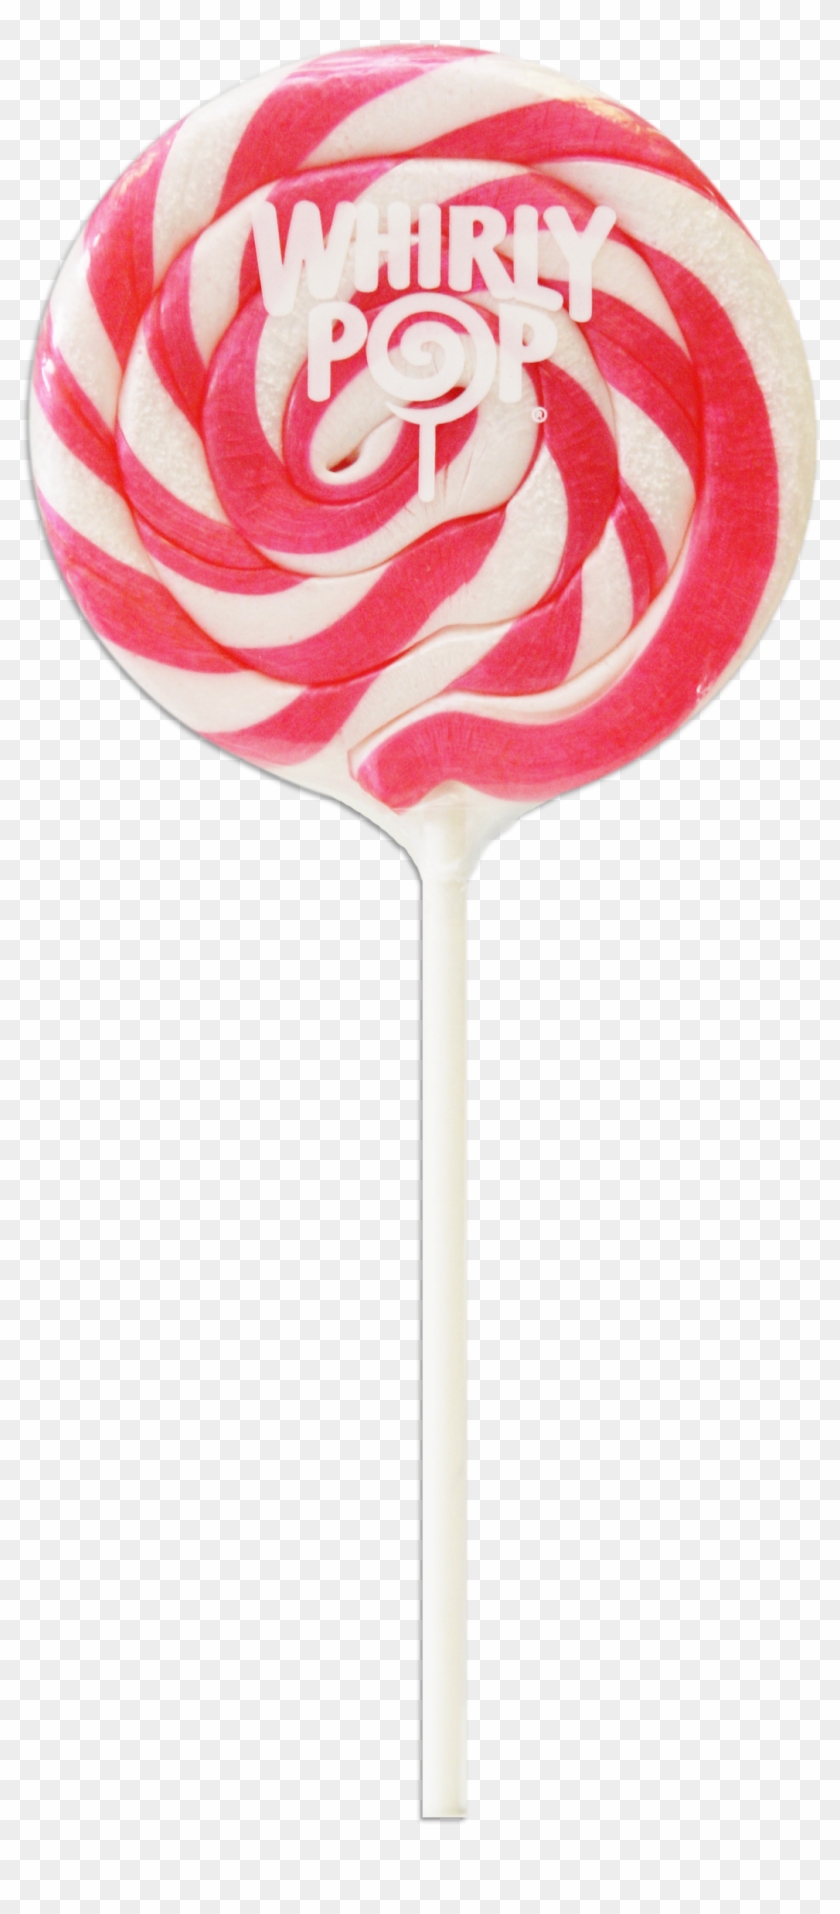 Whirly Pop Colors - Lollipop Clipart #4922182